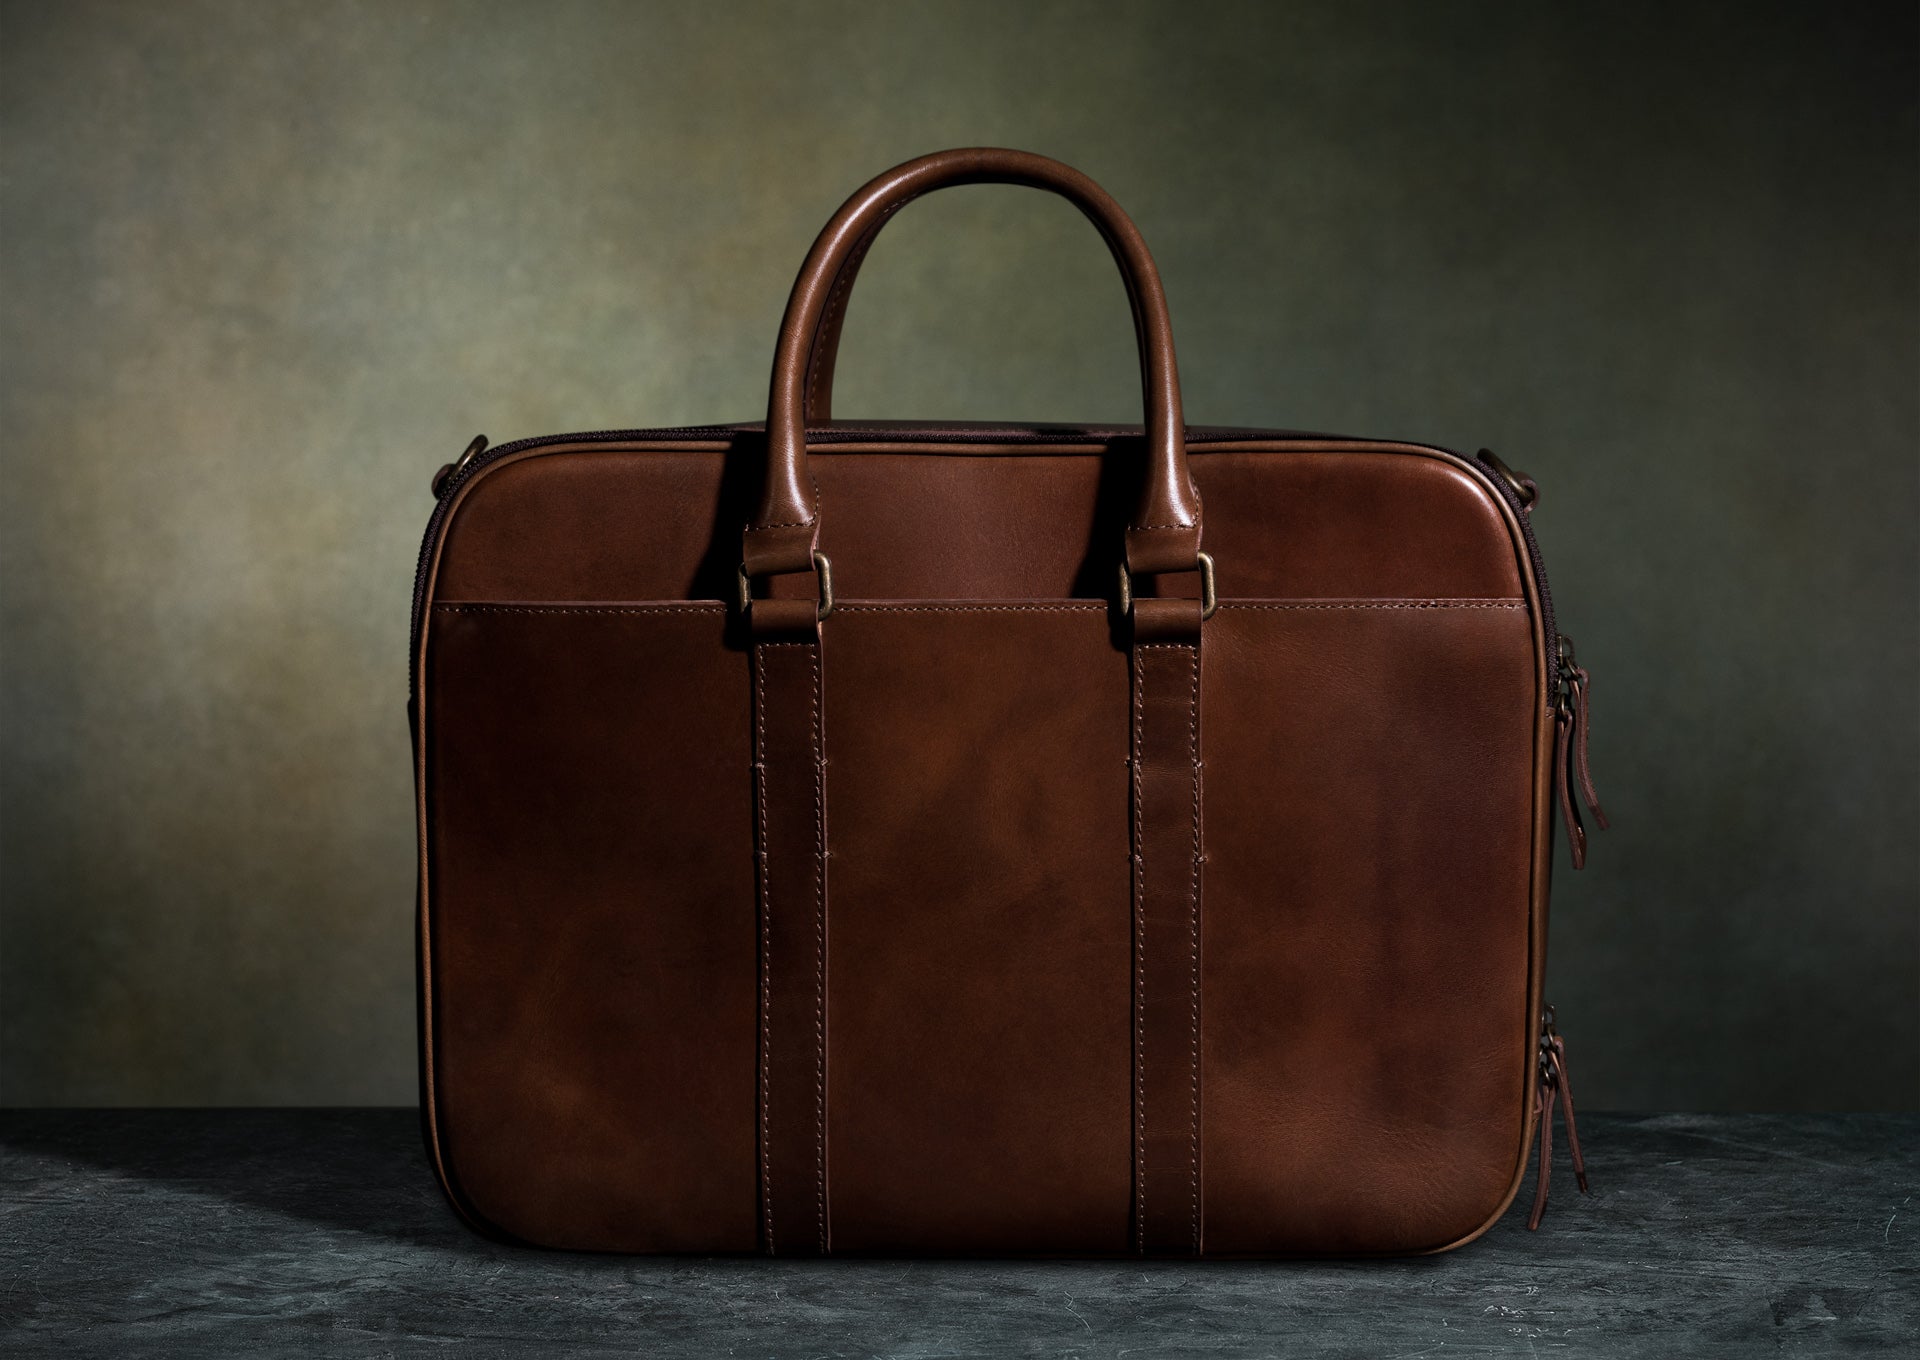 Premium Executive Laptop Briefcase Bag.